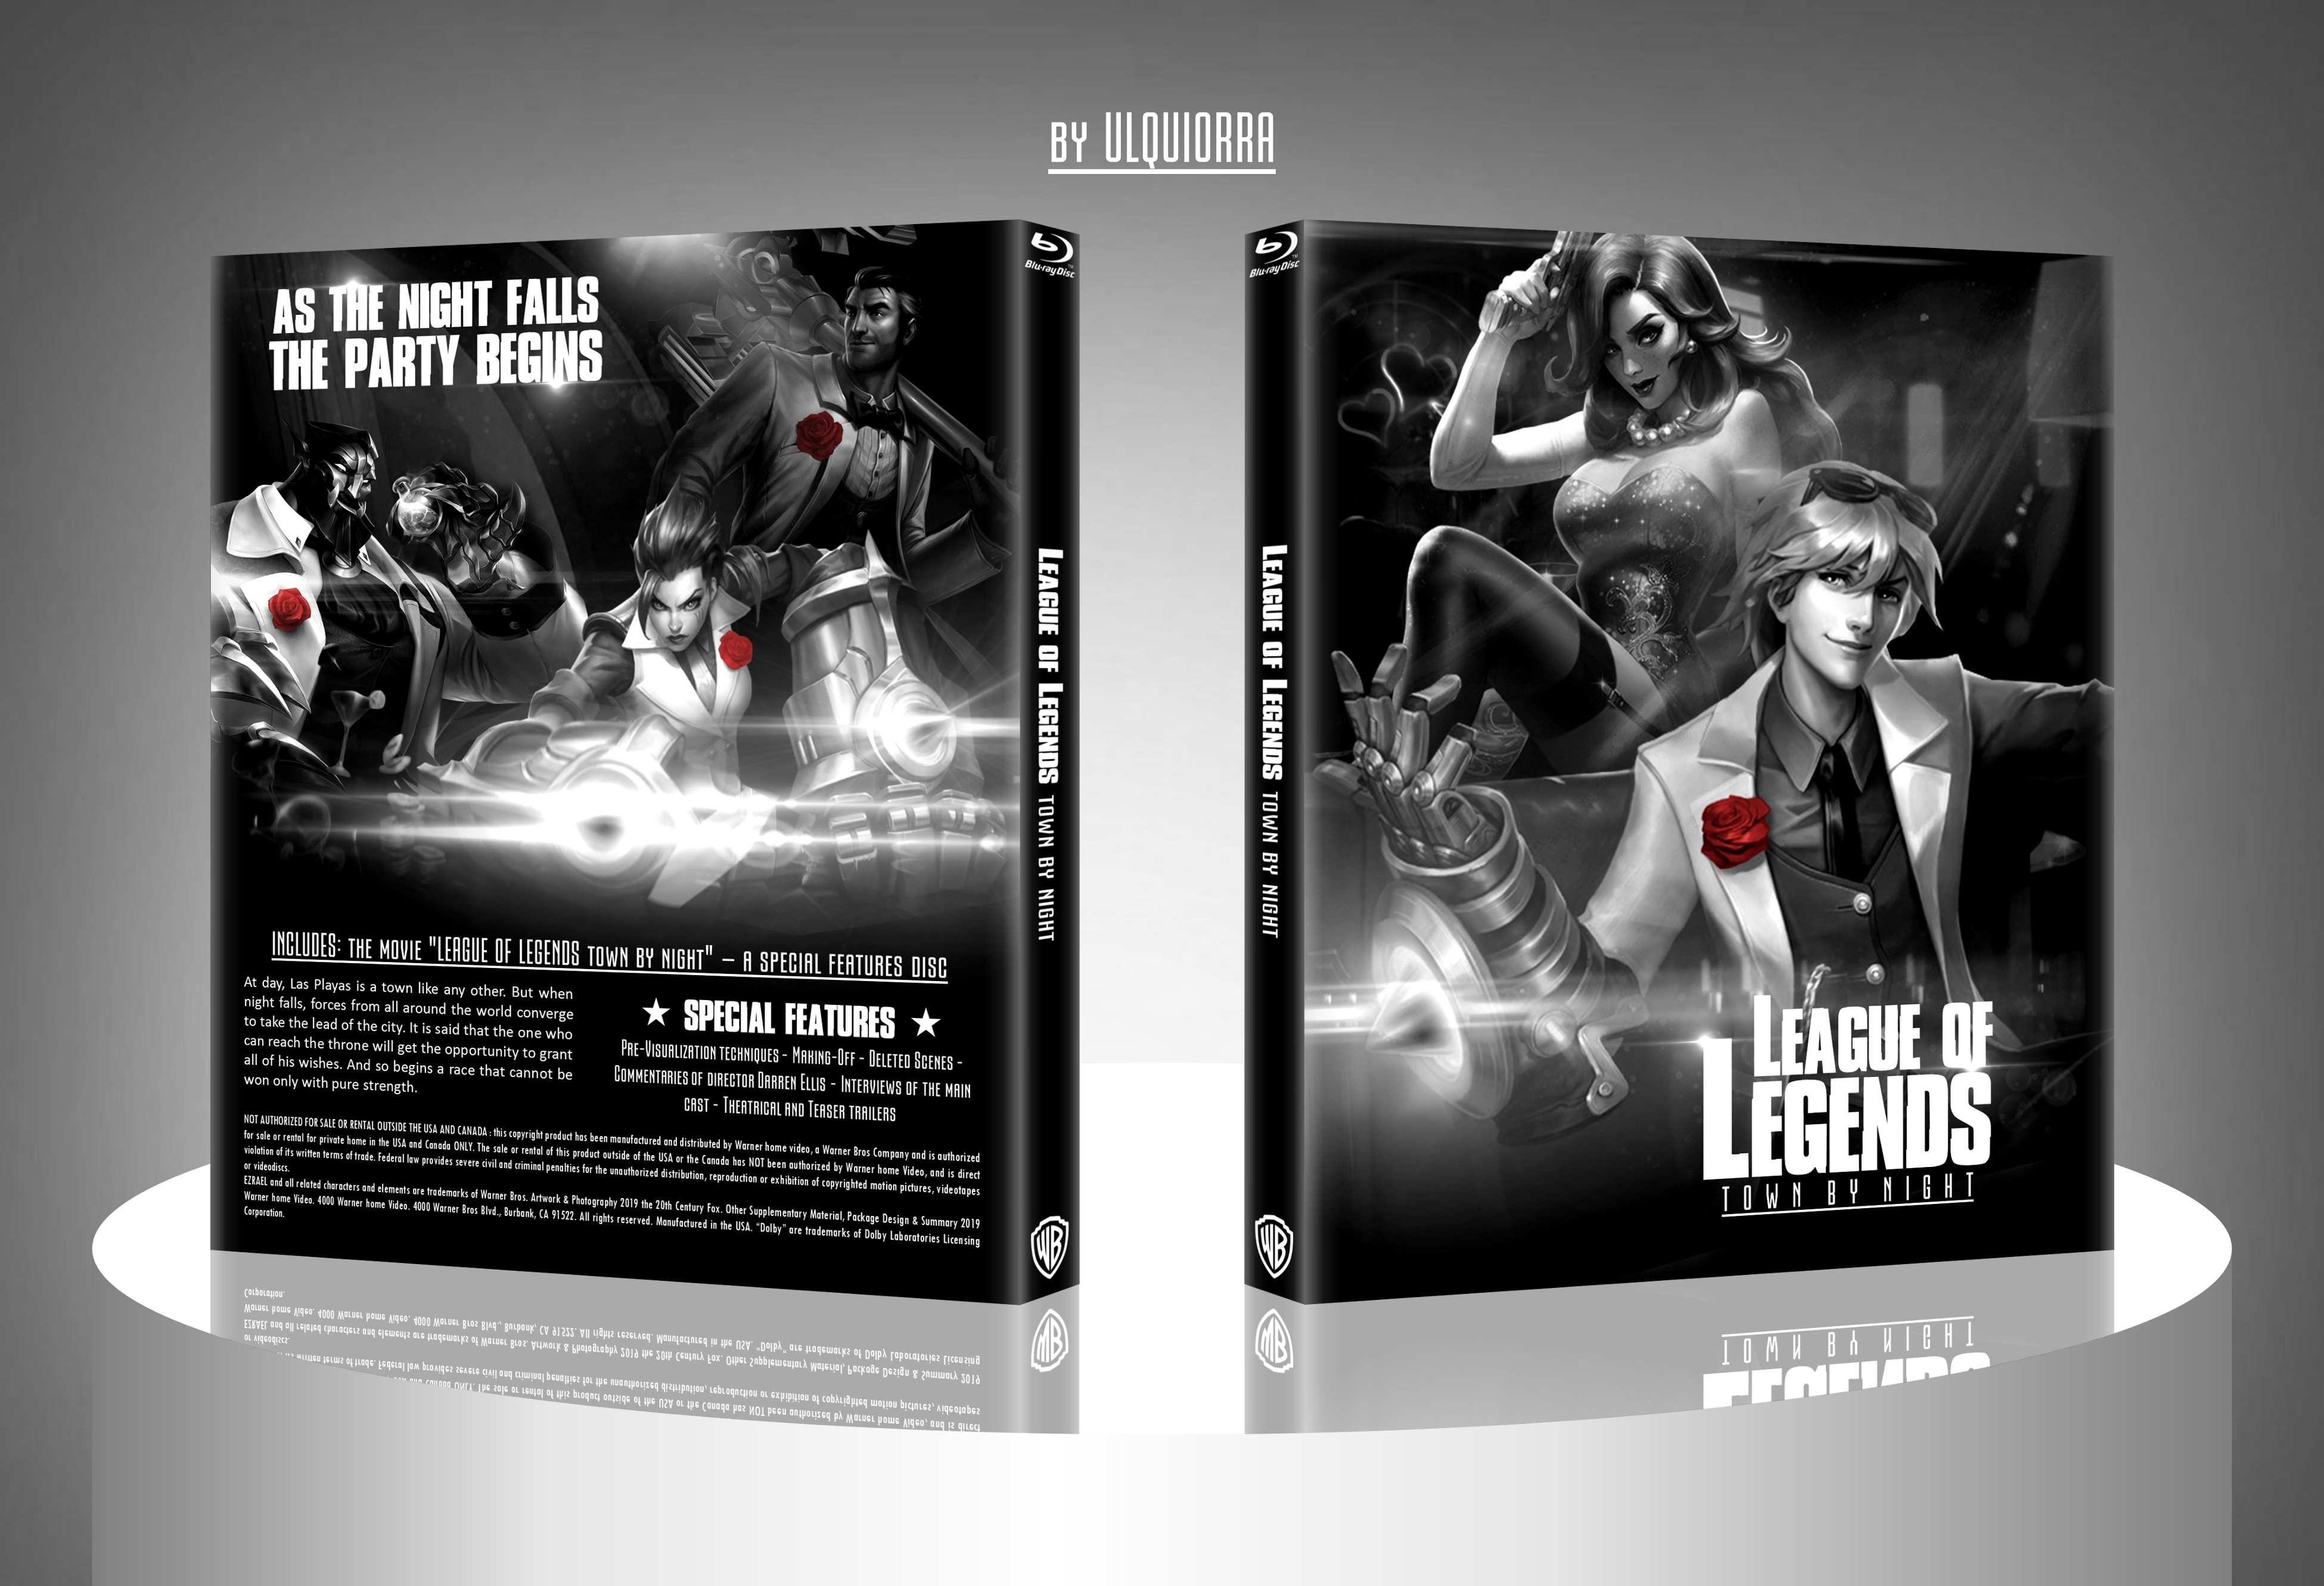 League of Legends box cover